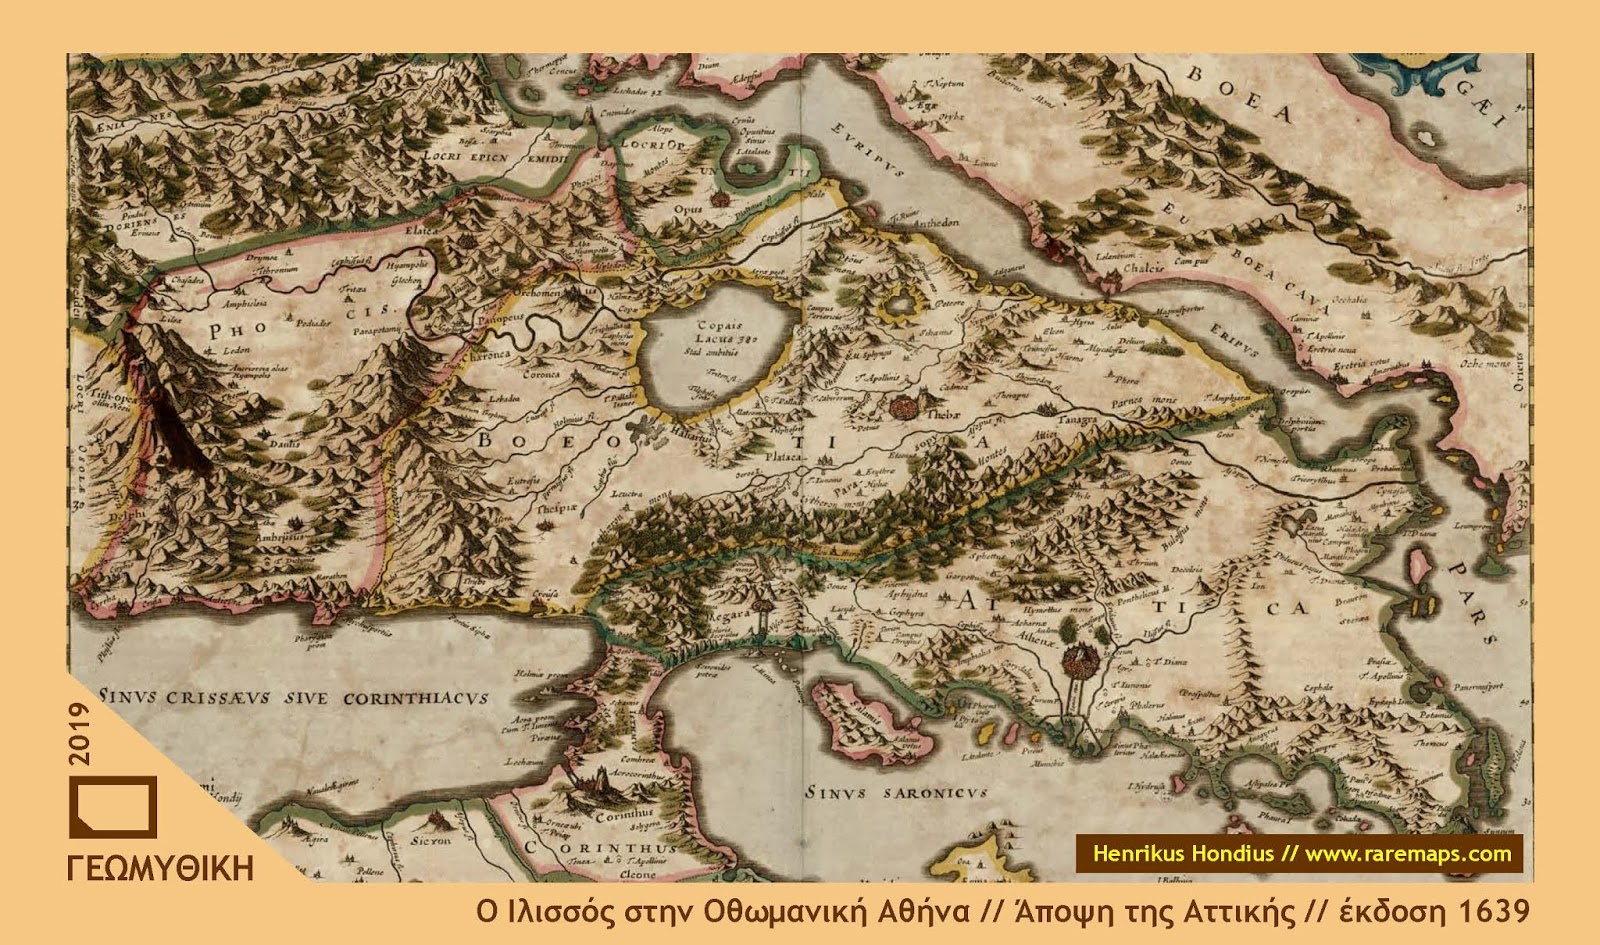 O Ιλισσός στην Οθωμανική Αθήνα (1630 - 1833) μέσα από 25 χάρτες και γκραβούρες εποχής.